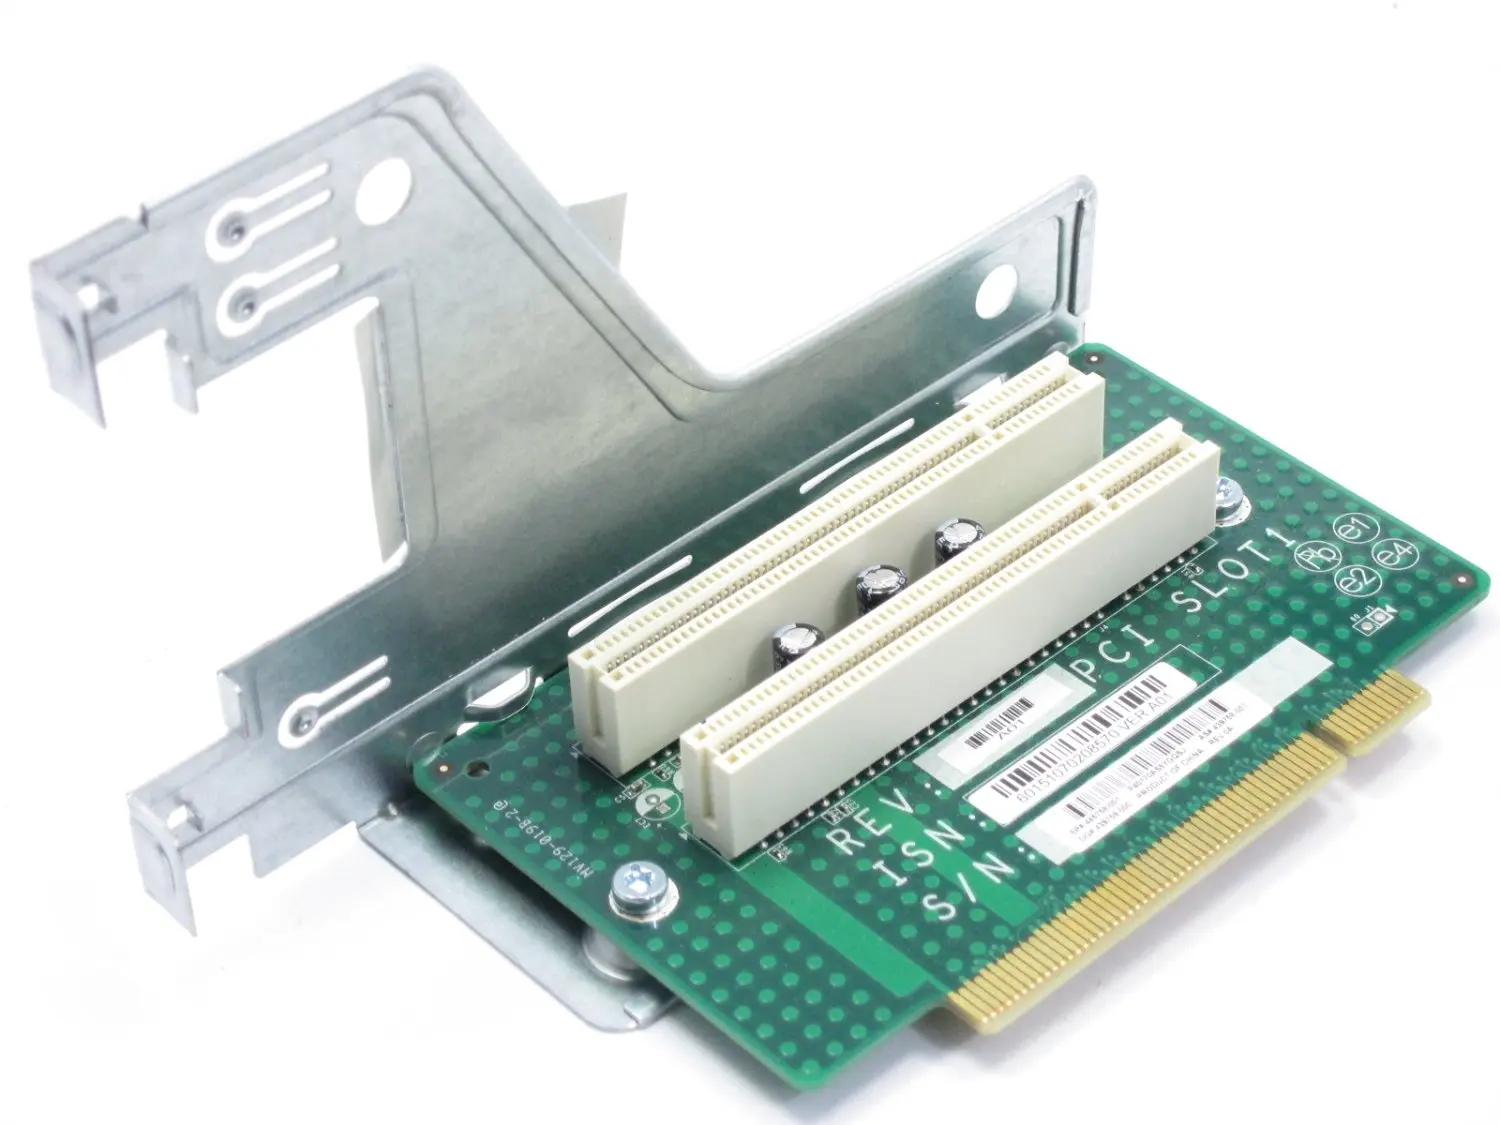 Райзер PCI x4. PCI-Express x4 райзер. Адаптер угловой PCI-E x1 to PCI-E x4s. Переходник адаптер угловой PCIE x16 PCI-Express райзер.